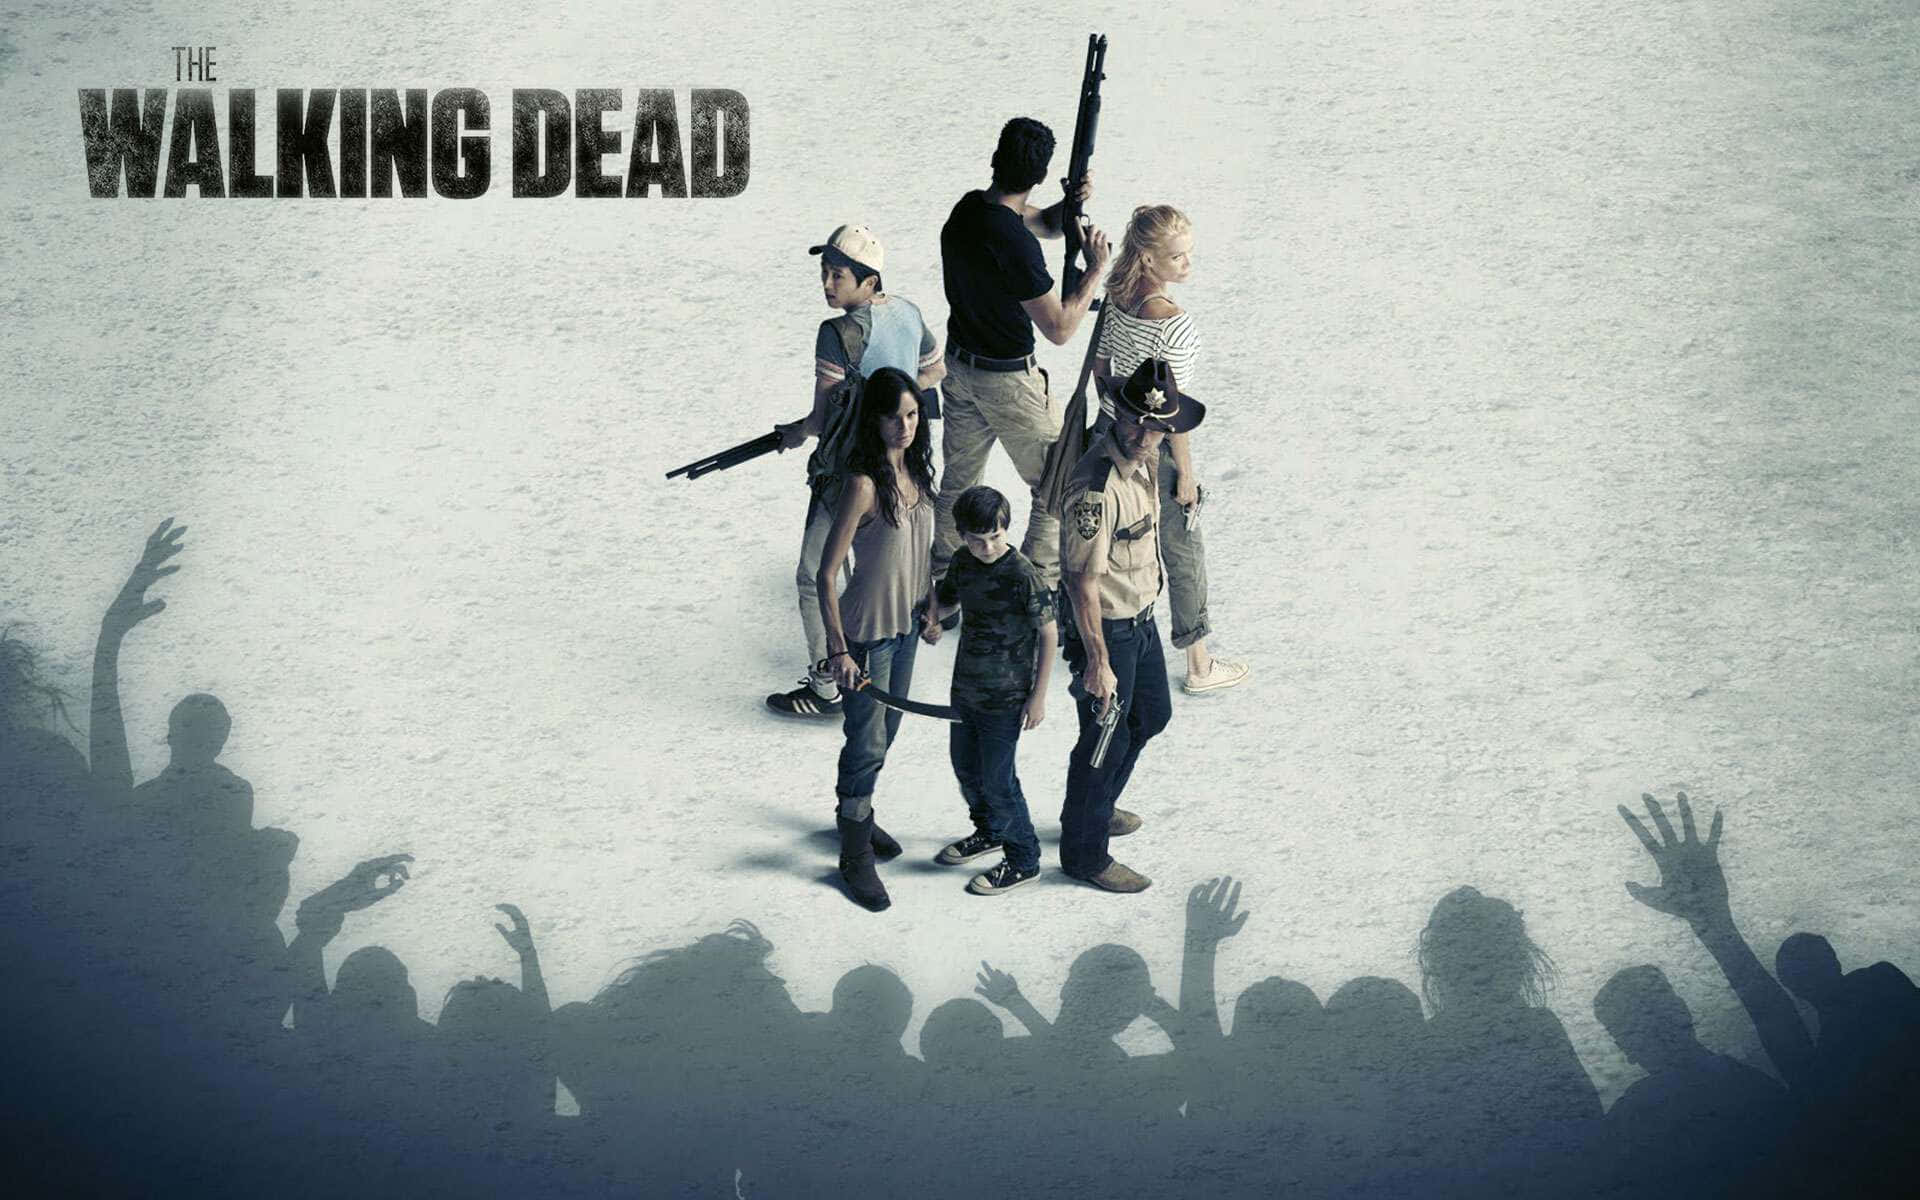 The Walking Dead 1920 X 1200 Background